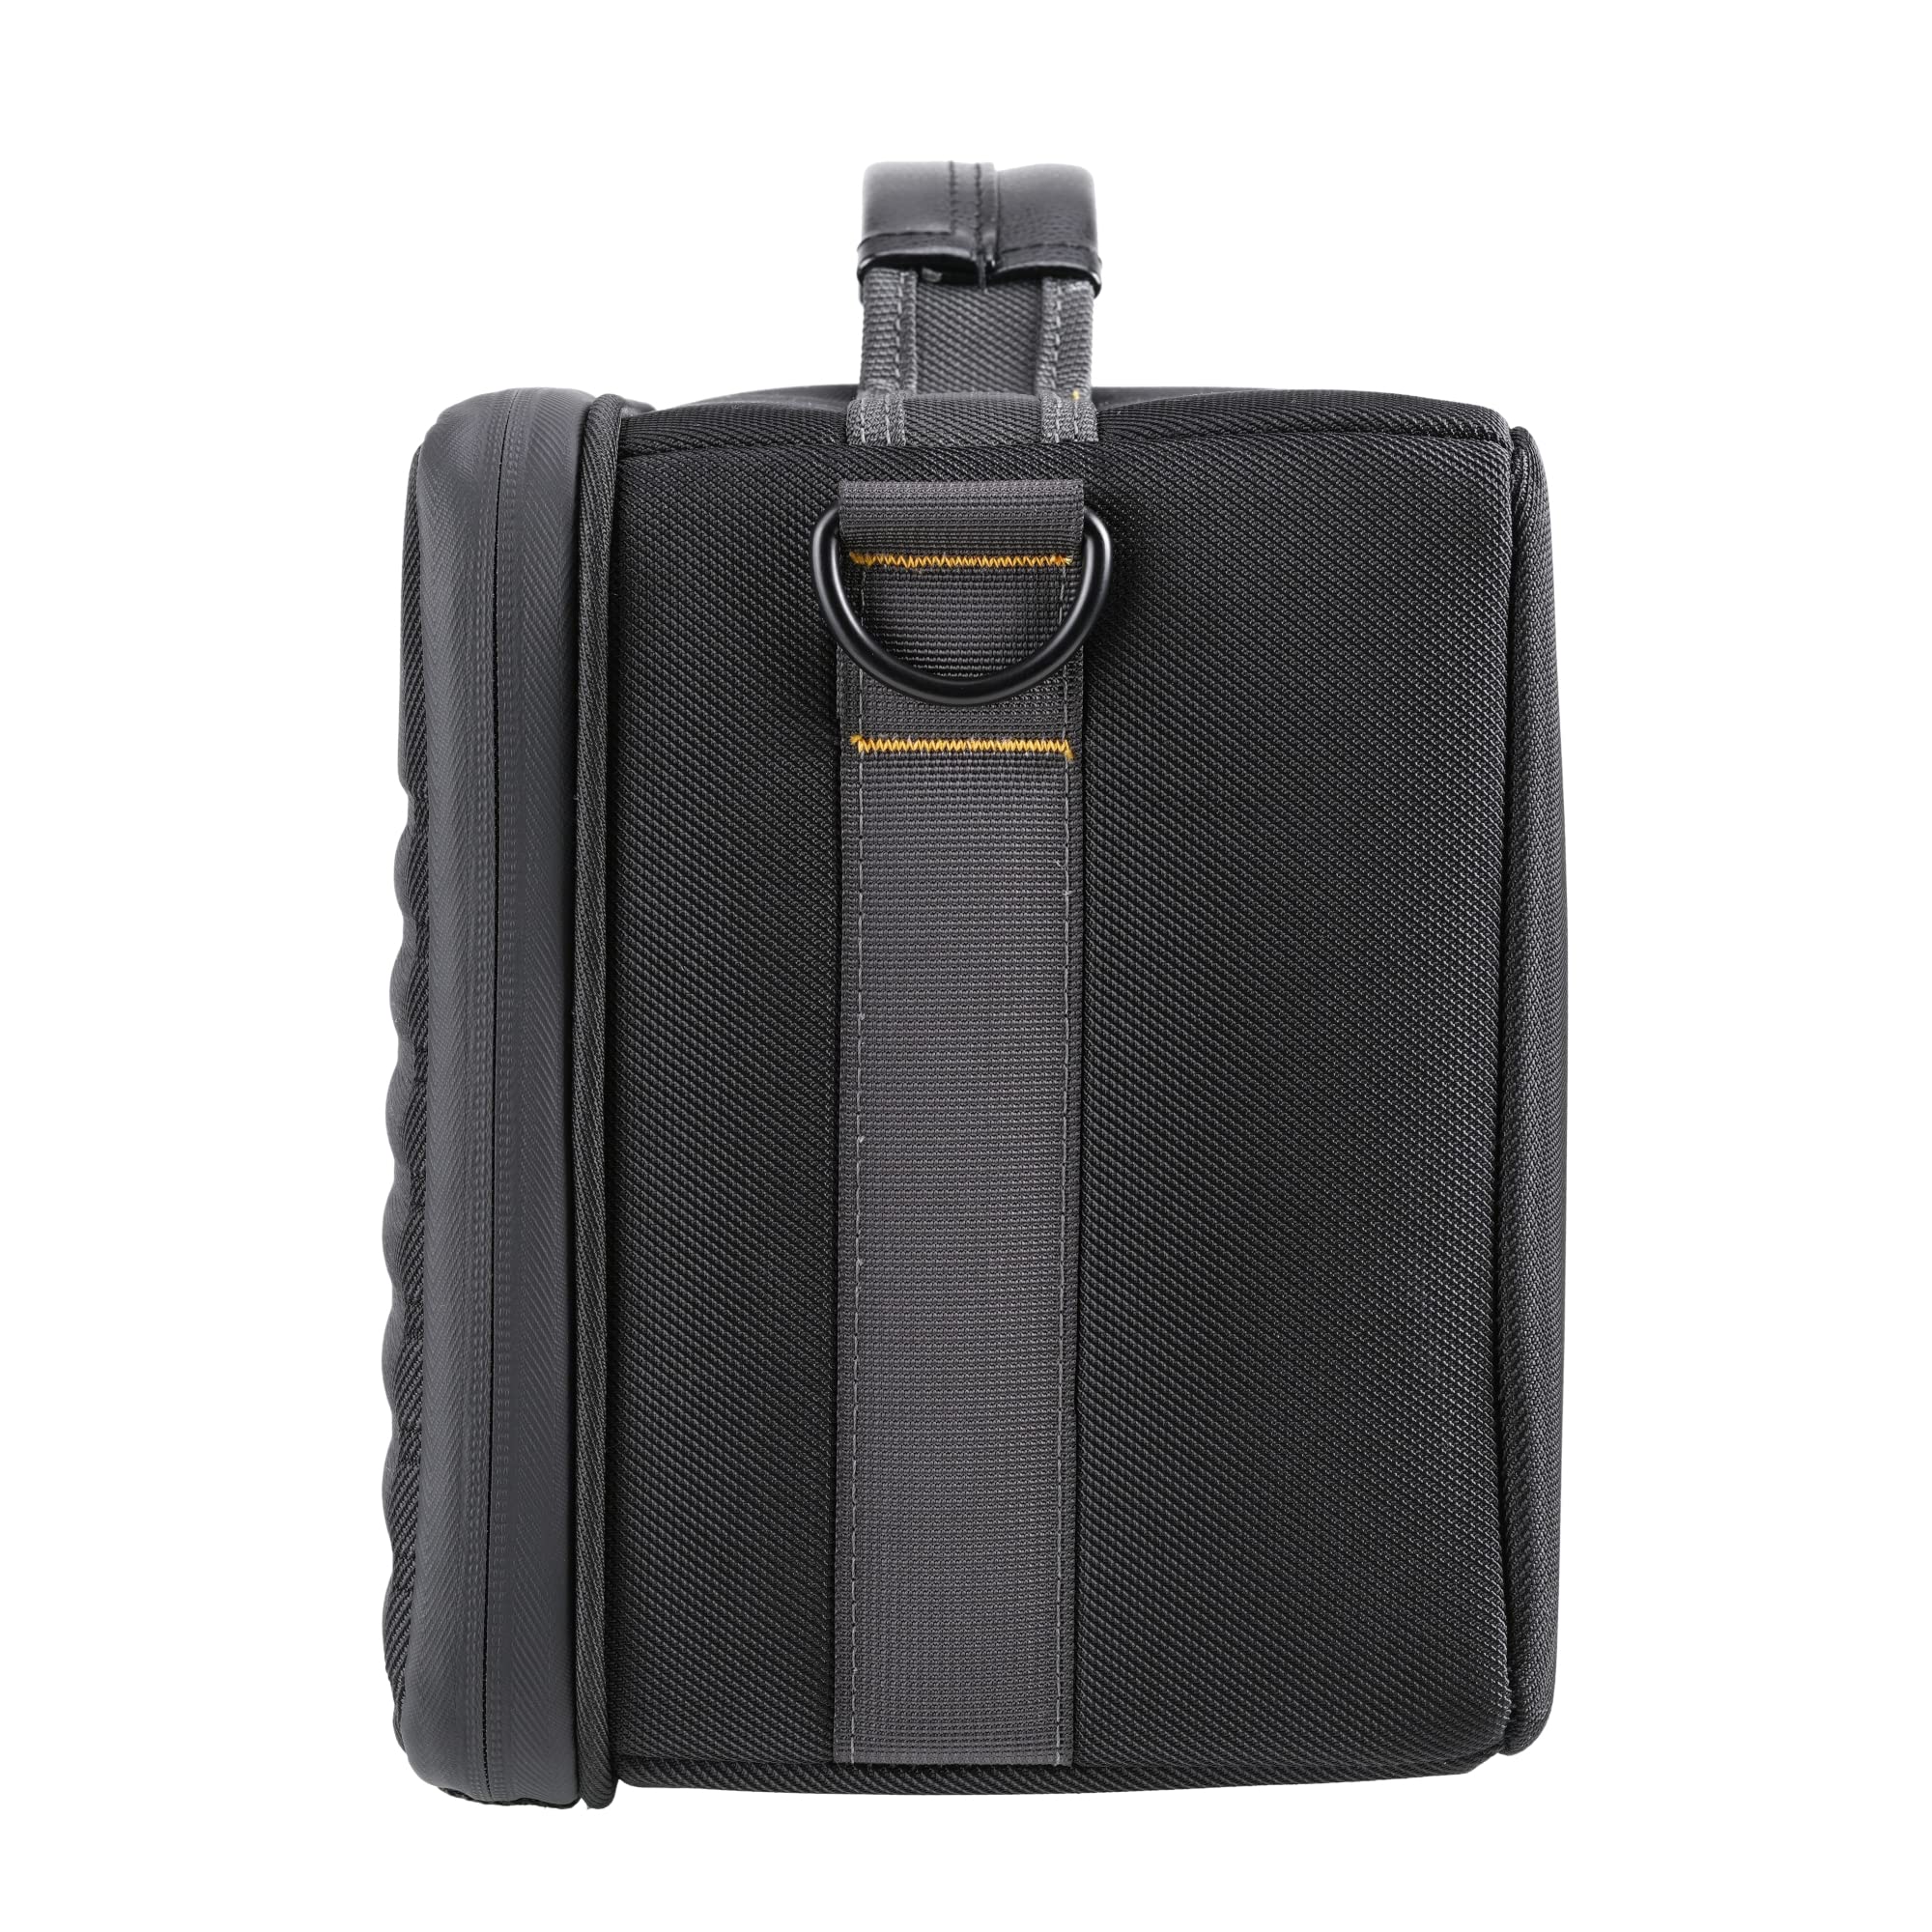 Vanguard VEO BIB Divider S37 Customizeable Insert/Protection Bag for SLR DSLR Camera, Lenses, Accessories